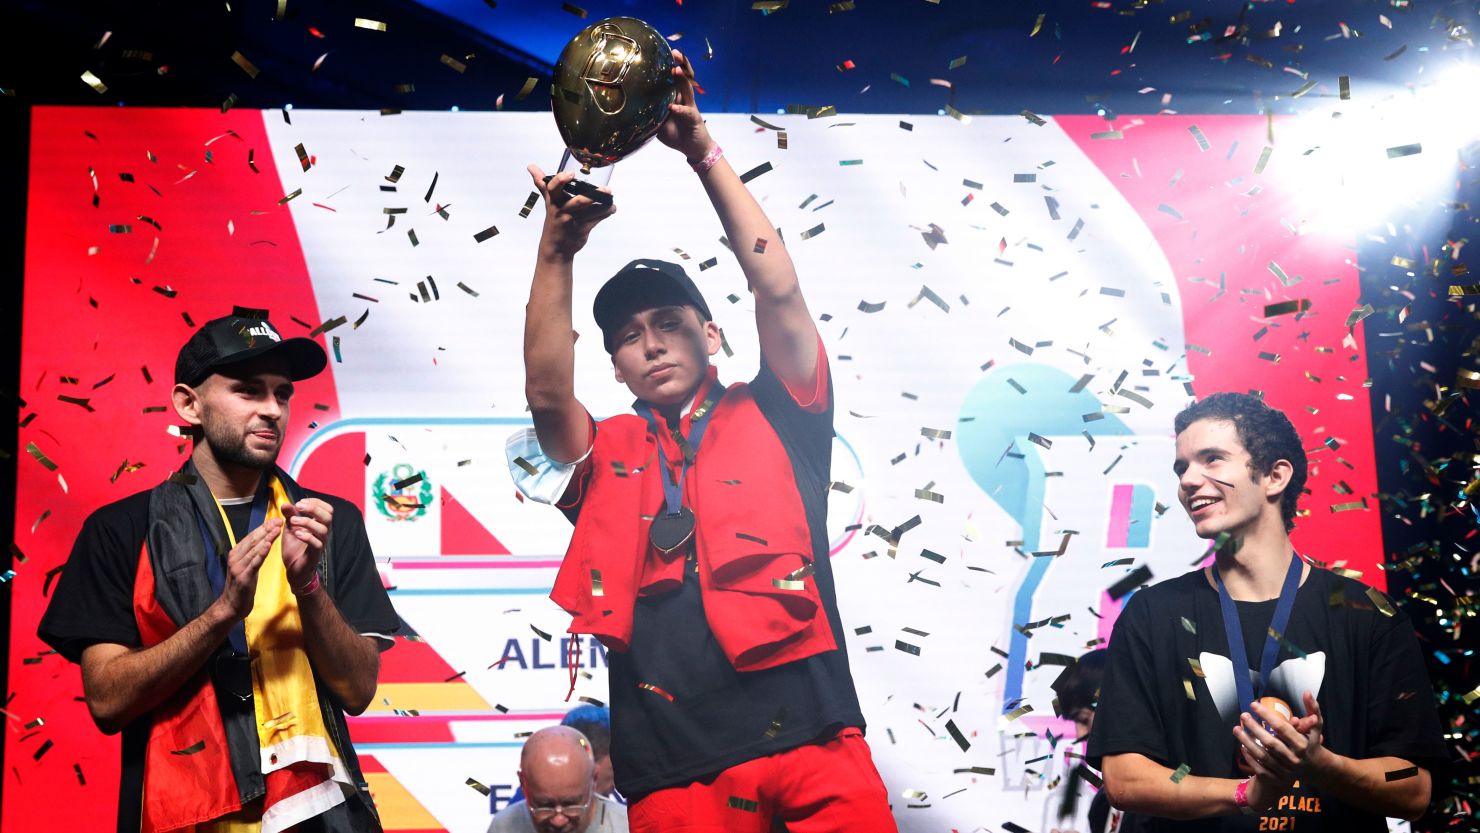 Peru's Francesco De La Cruz celebrates after winning the first Balloon World Cup.